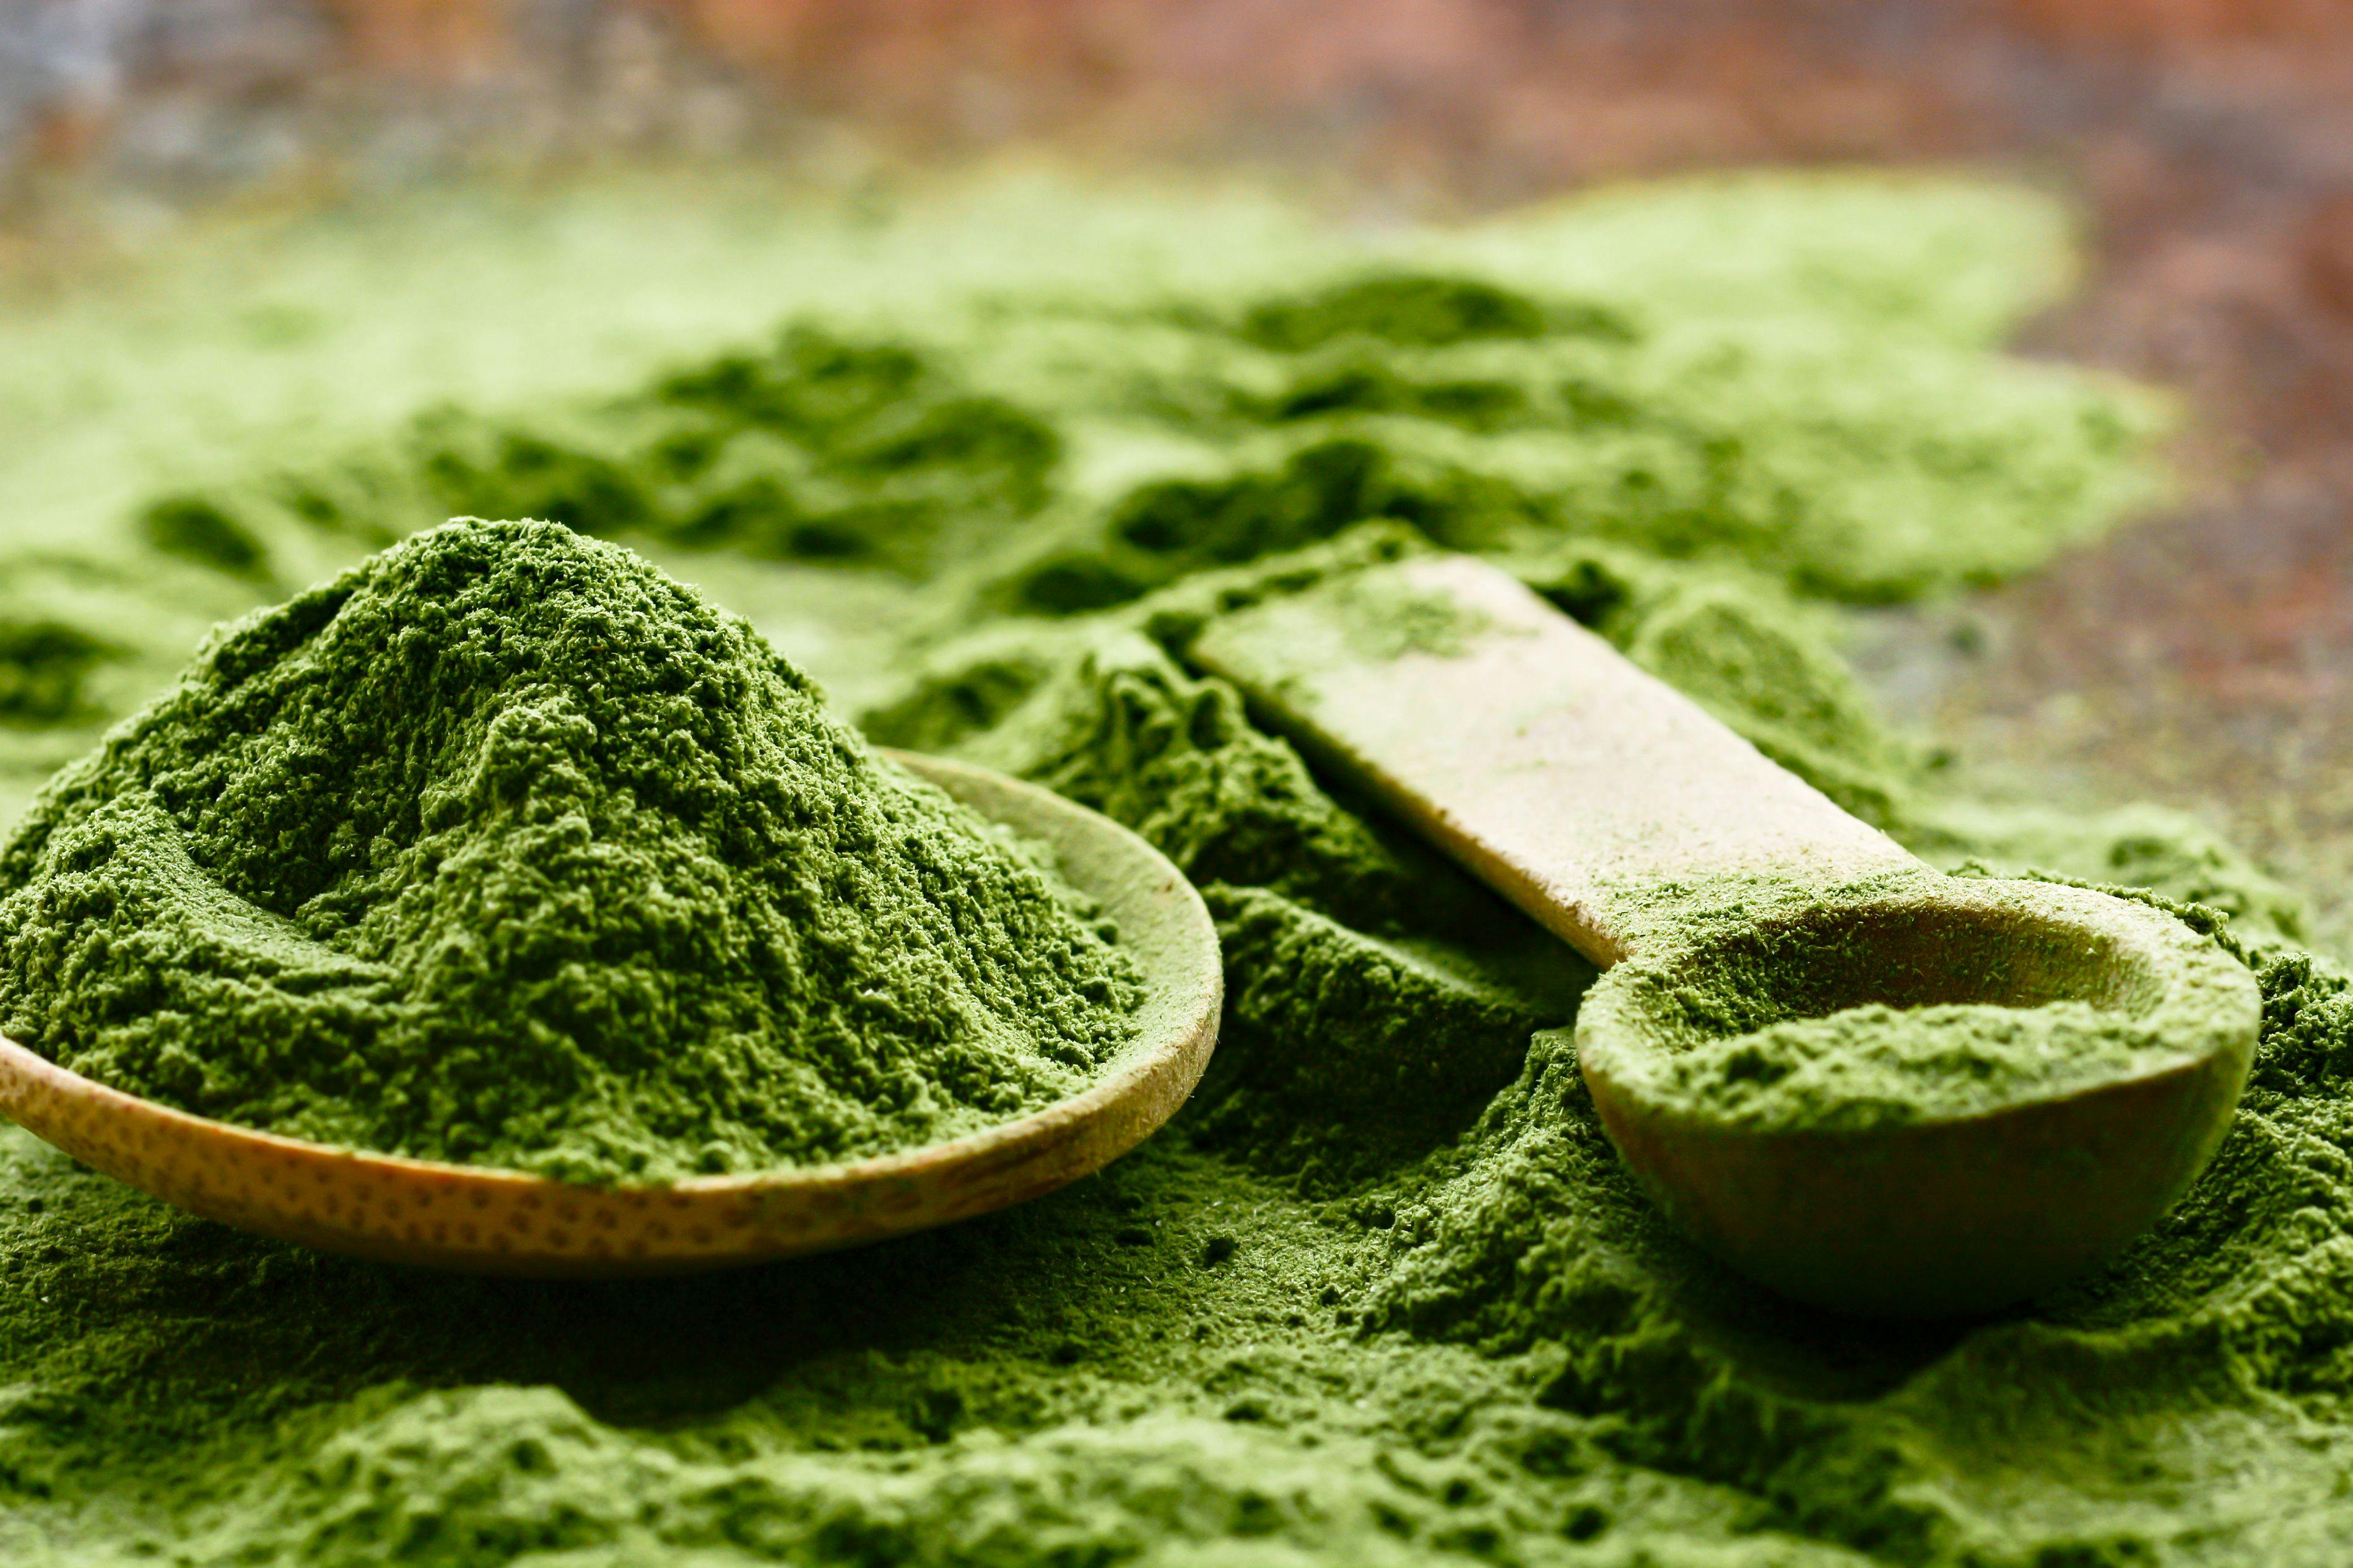 Green detox superfood powder | Image Credit: © Foodfine - stock.adobe.com